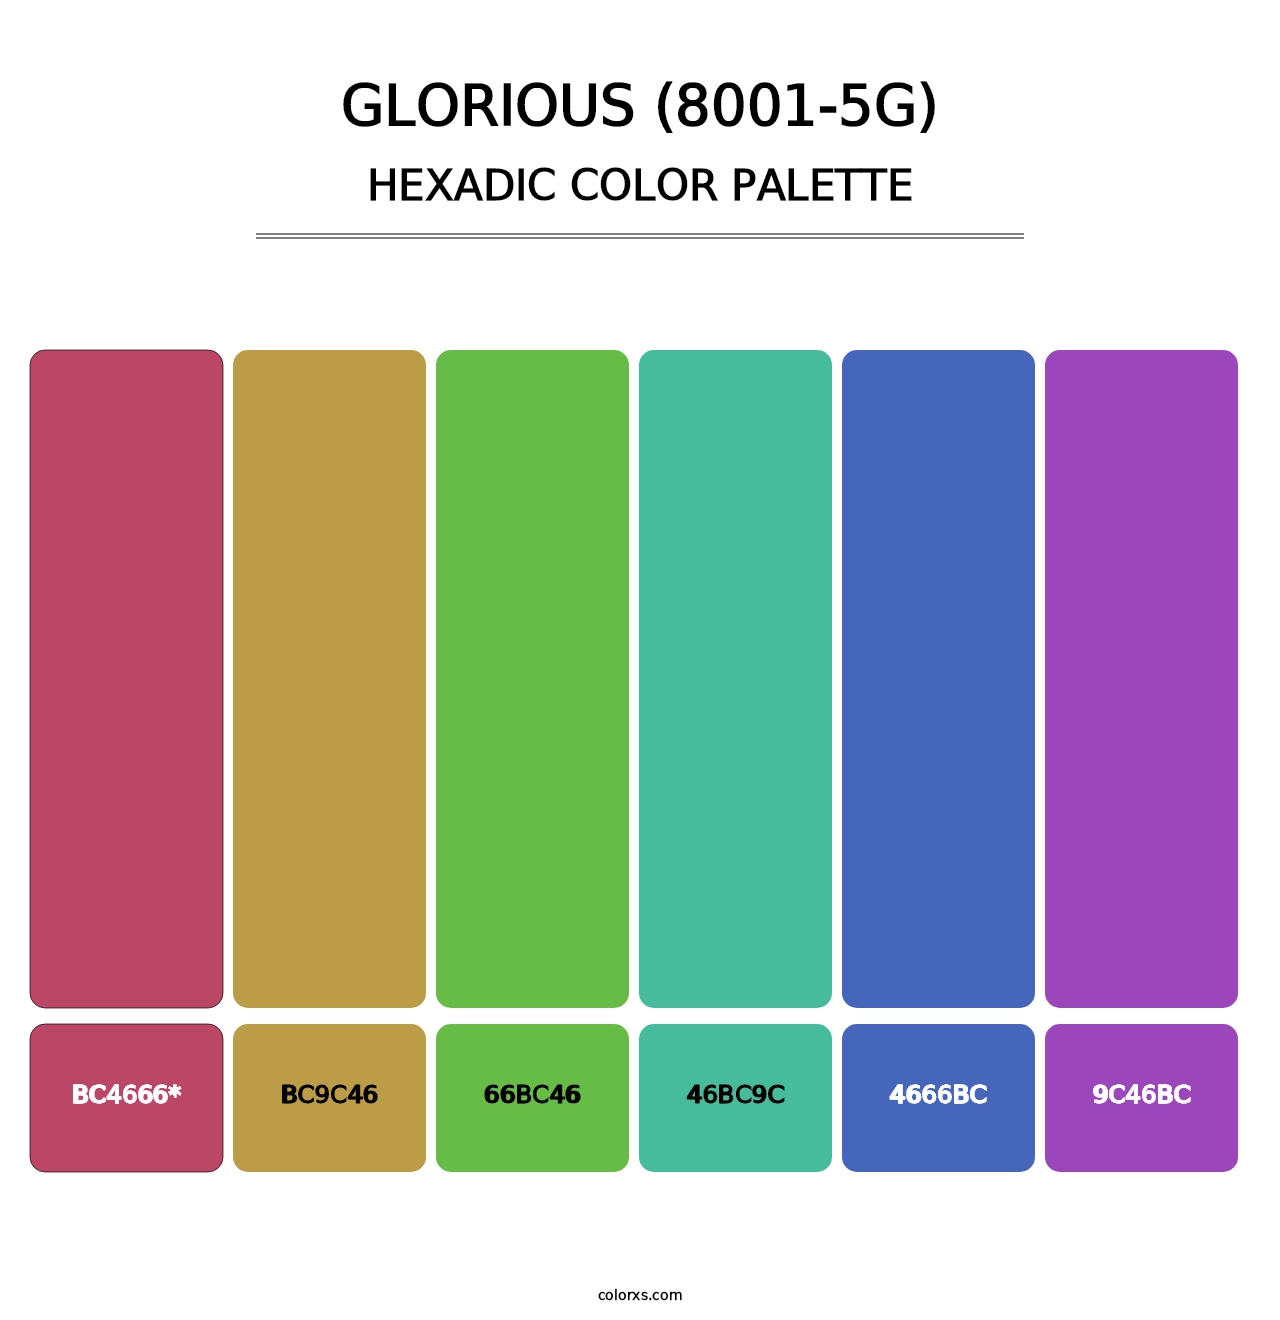 Glorious (8001-5G) - Hexadic Color Palette